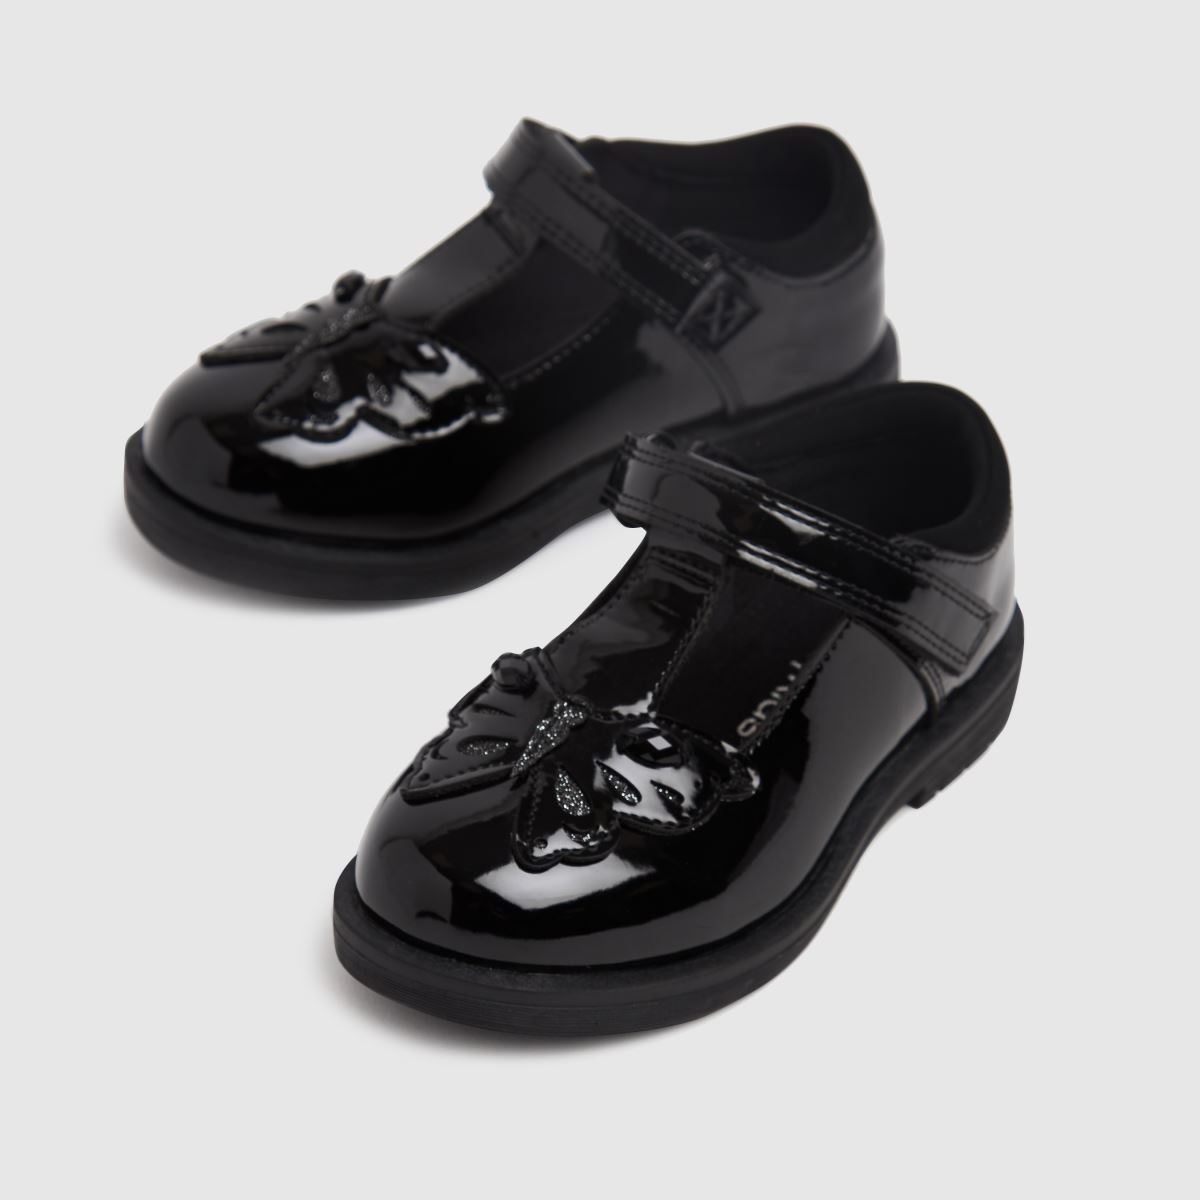 Schuh vegan black lavish butterfly shoes 